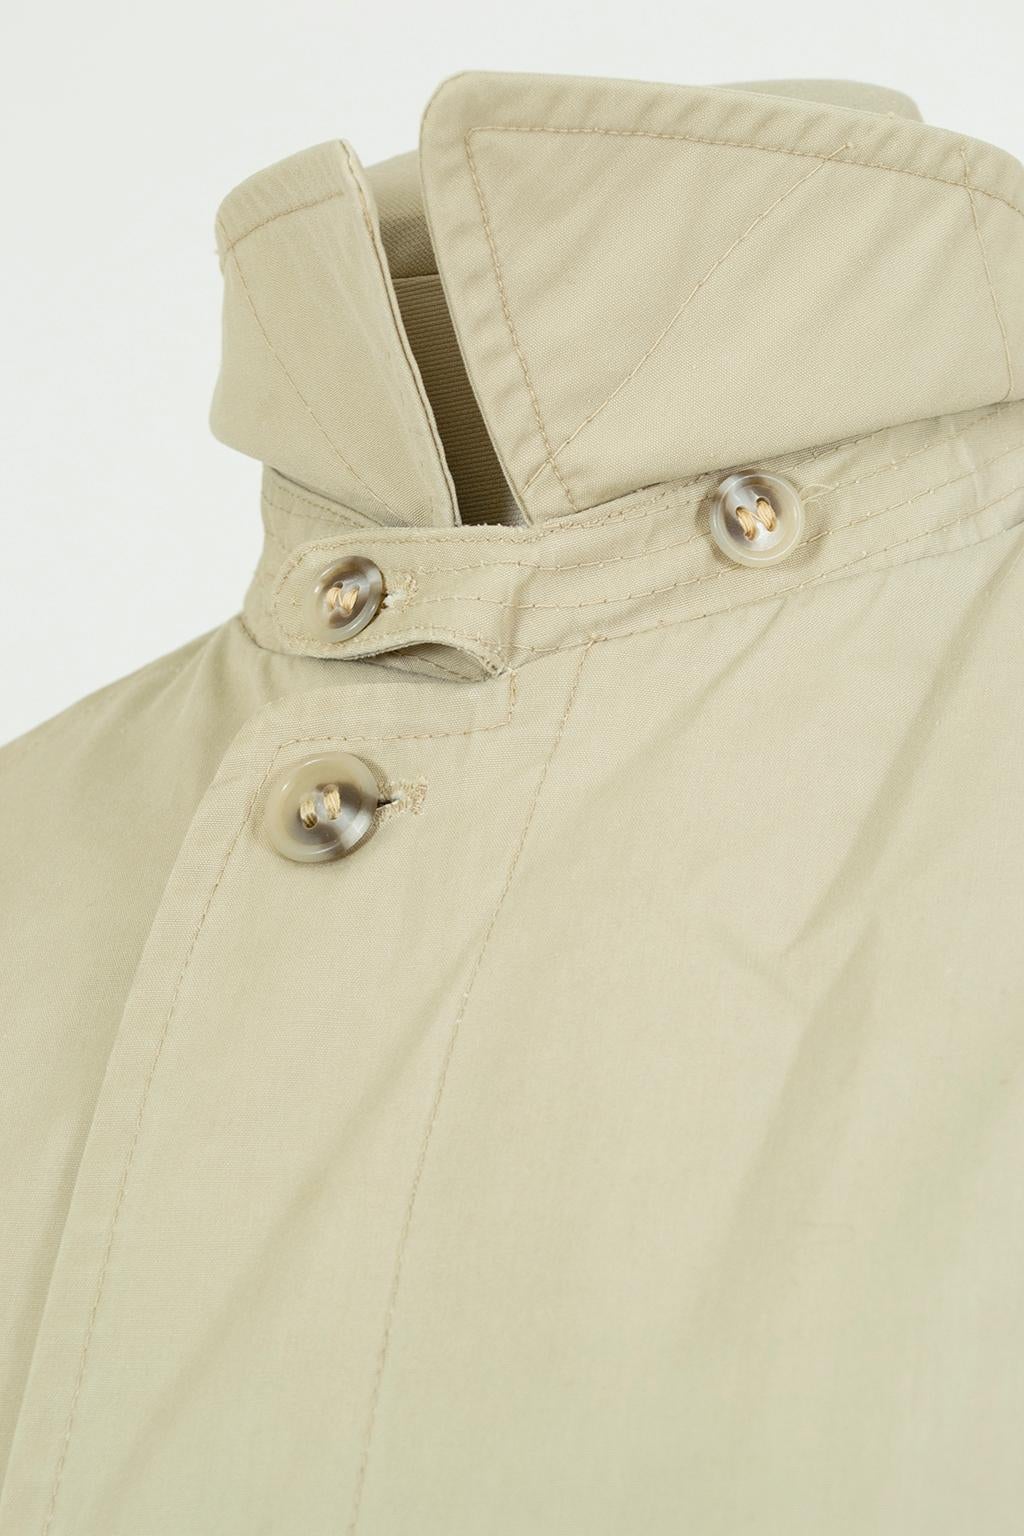 Men’s London Fog Khaki Trench Raincoat with Removable Alpaca Lining–40/42, 1950s 4